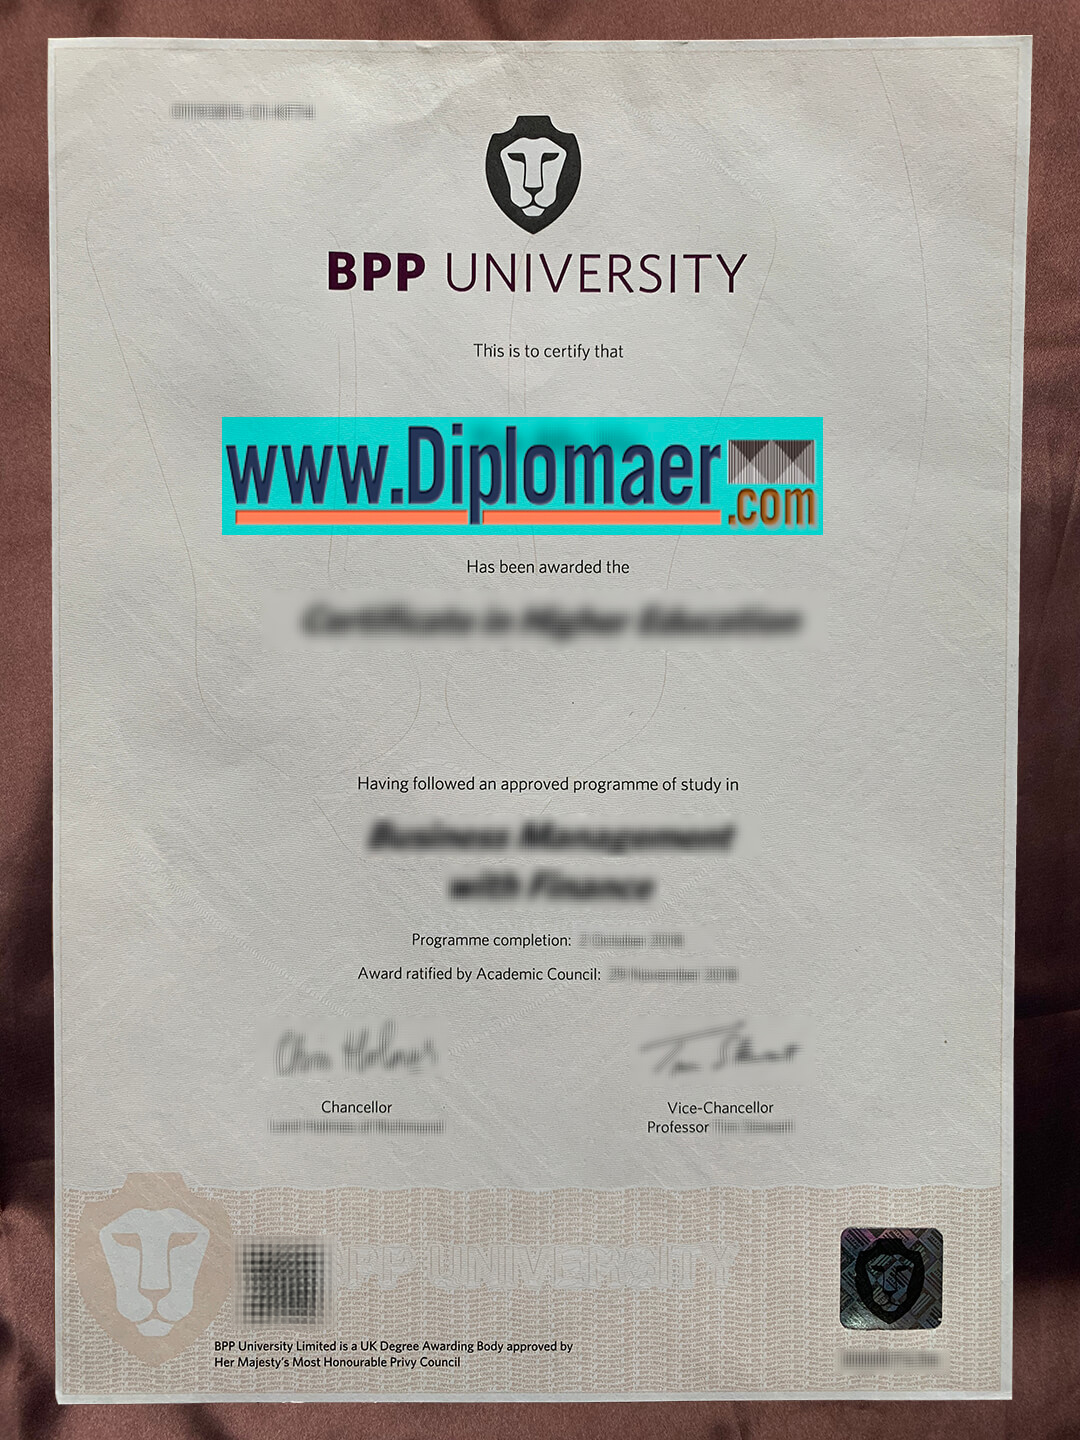 BPP University fake diploma 1 - Which website provides the best quality BPP University fake certificates?